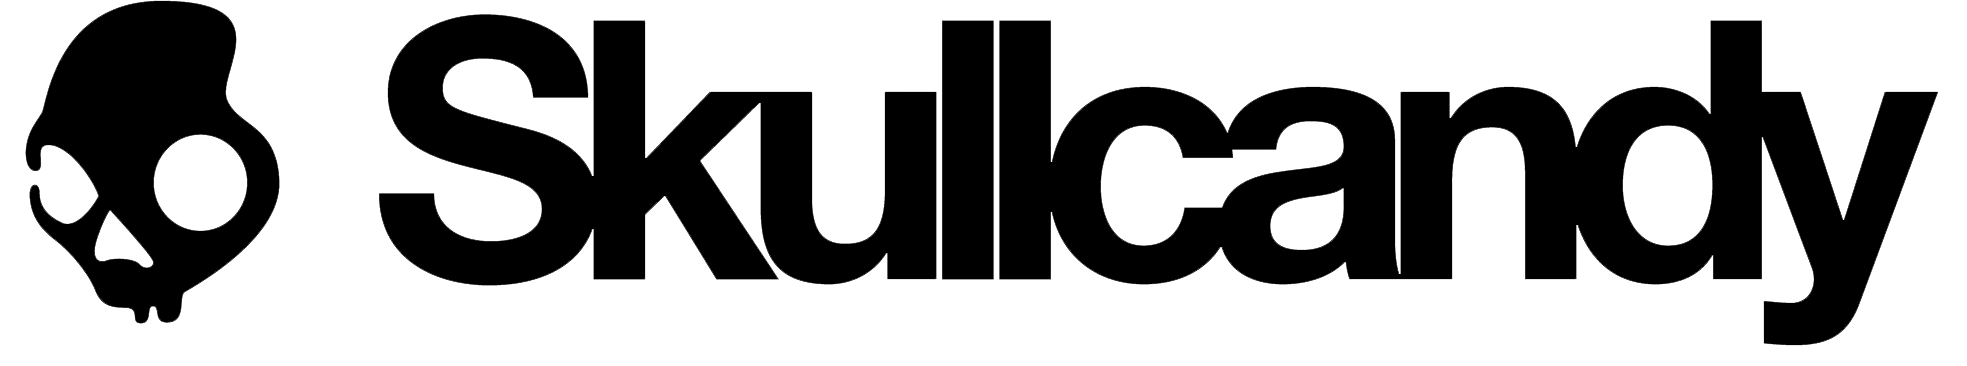 SΚULLCΑΝDΥ (S2ΒΡW-Ρ740) ΡUSΗ ΑCΤΙVΕ ΤRUΕ WΙRΕLΕSS (ΤRUΕ ΒLΑCΚ/ΟRΑΝGΕ) ΕΑRΒUDS